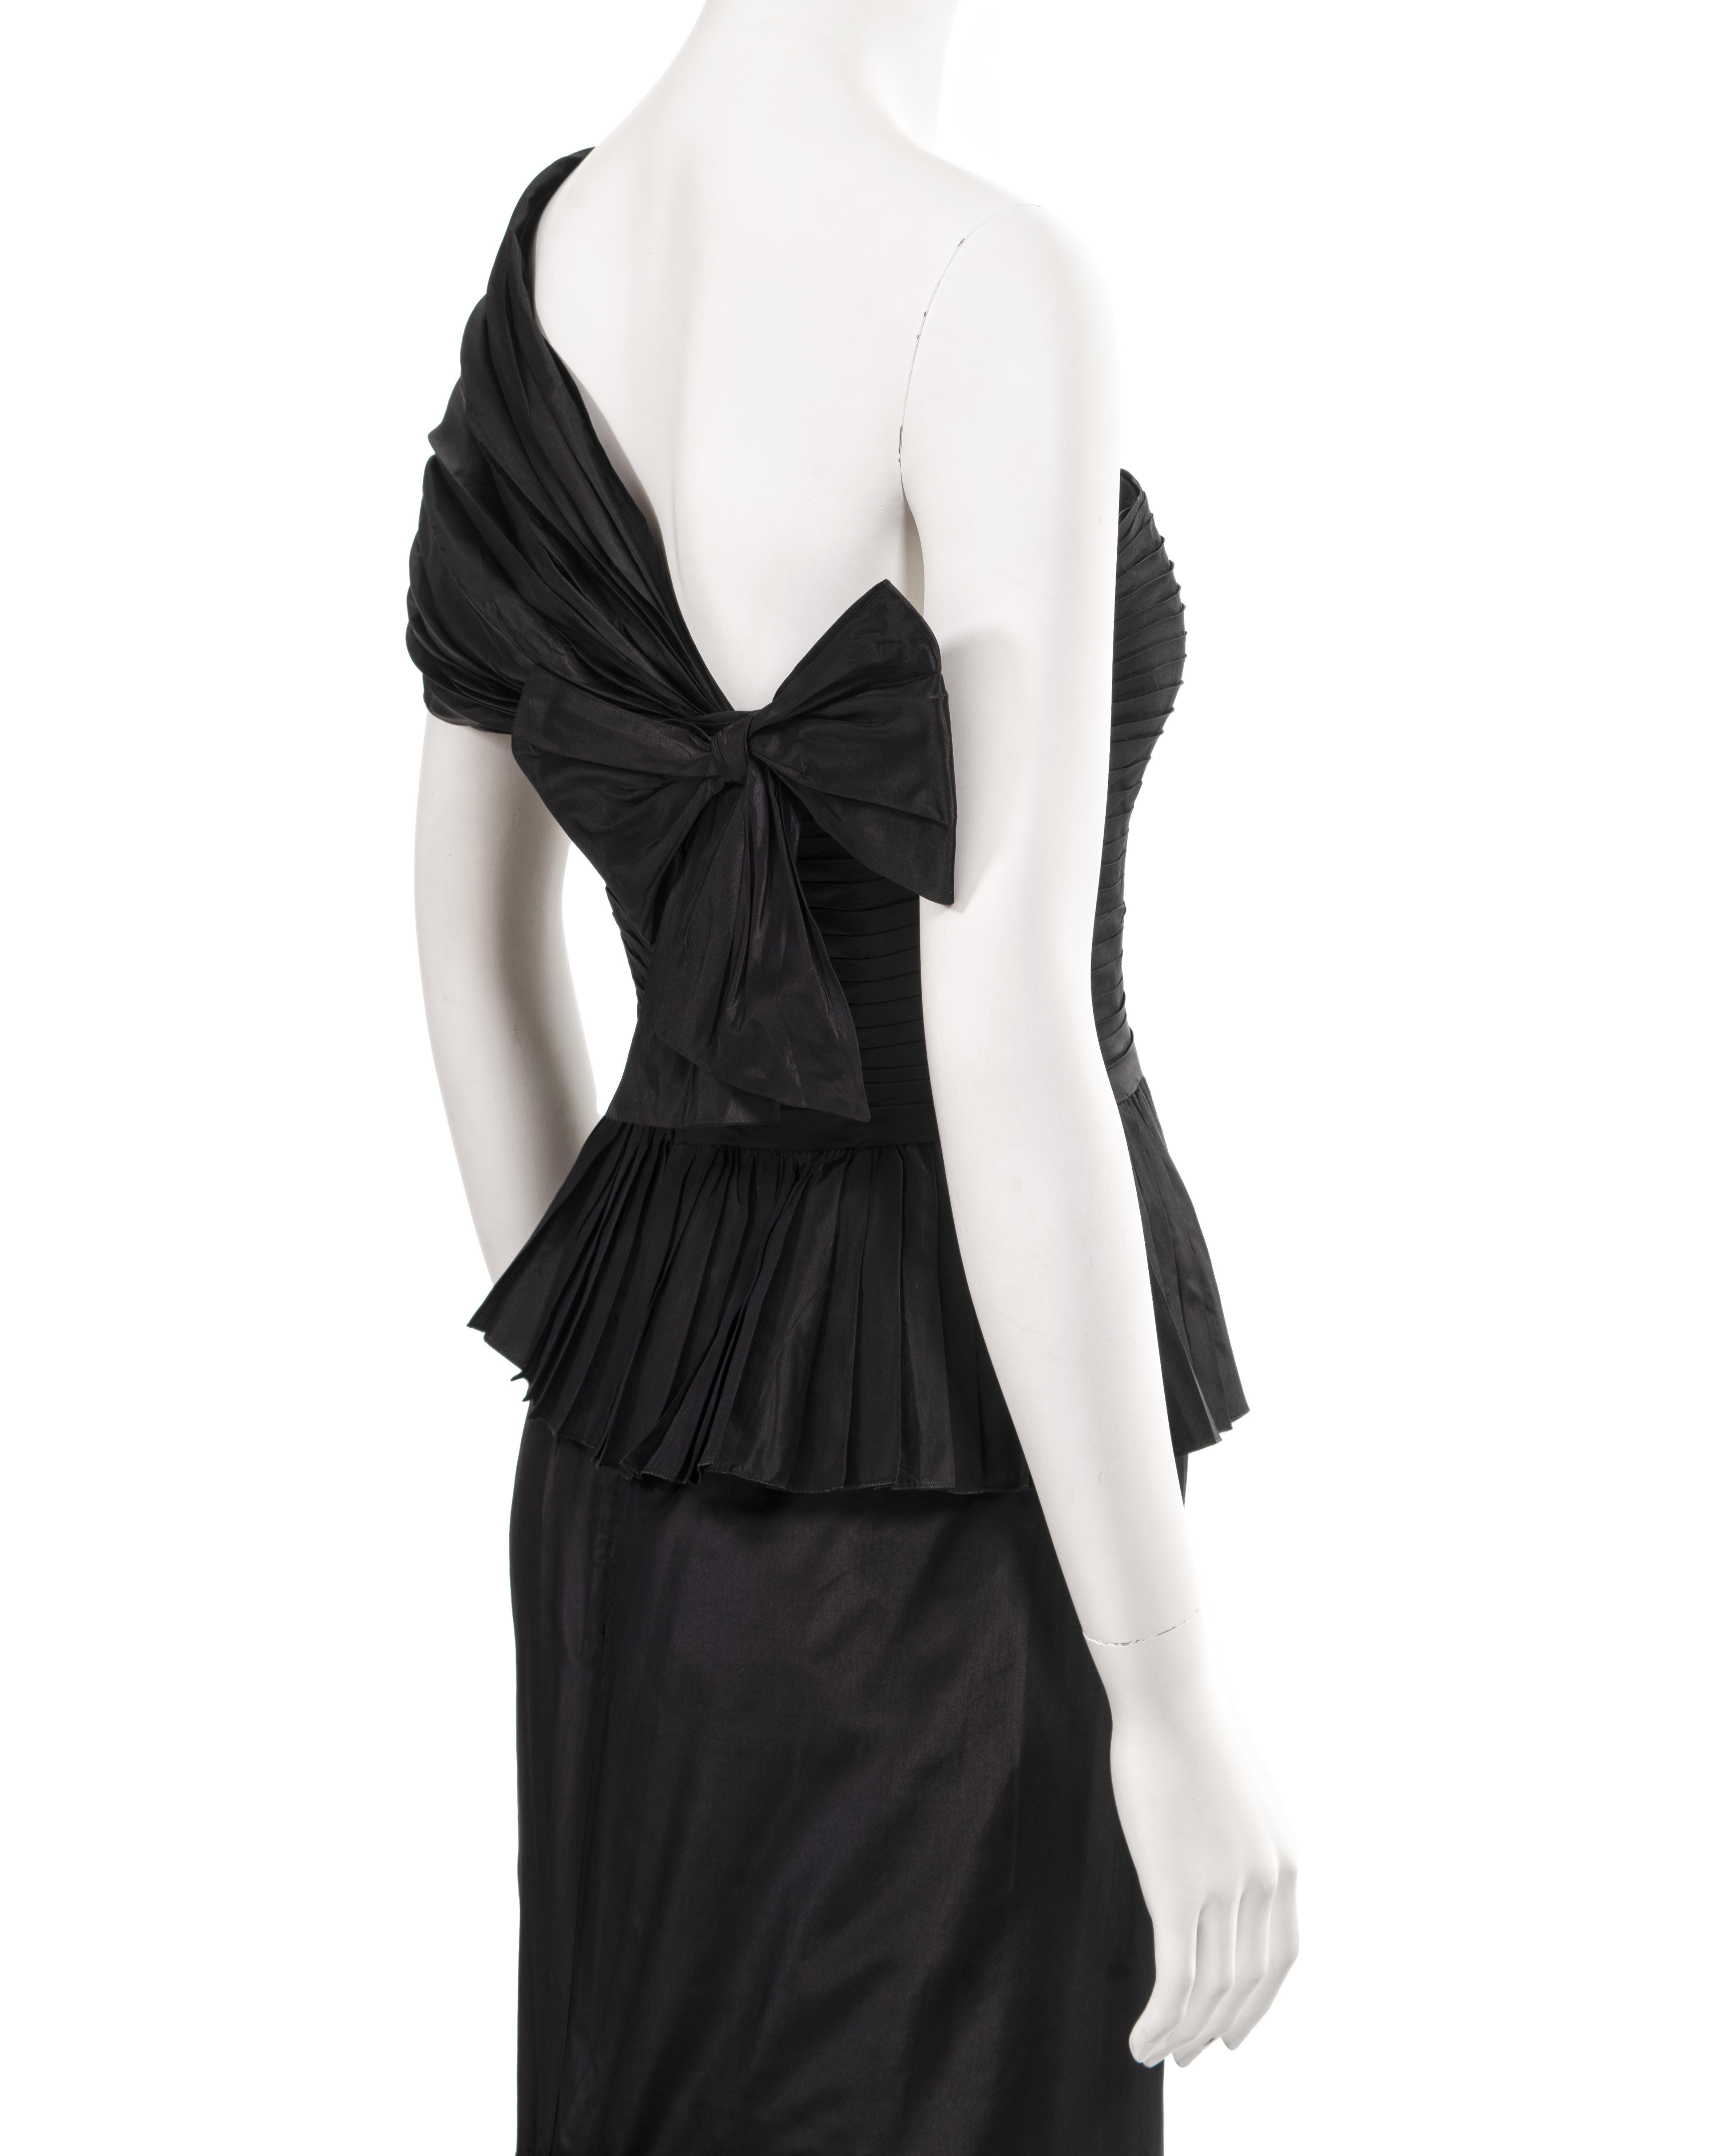 Chanel by Karl Lagerfeld black silk taffeta evening dress, ss 1986 For Sale 8